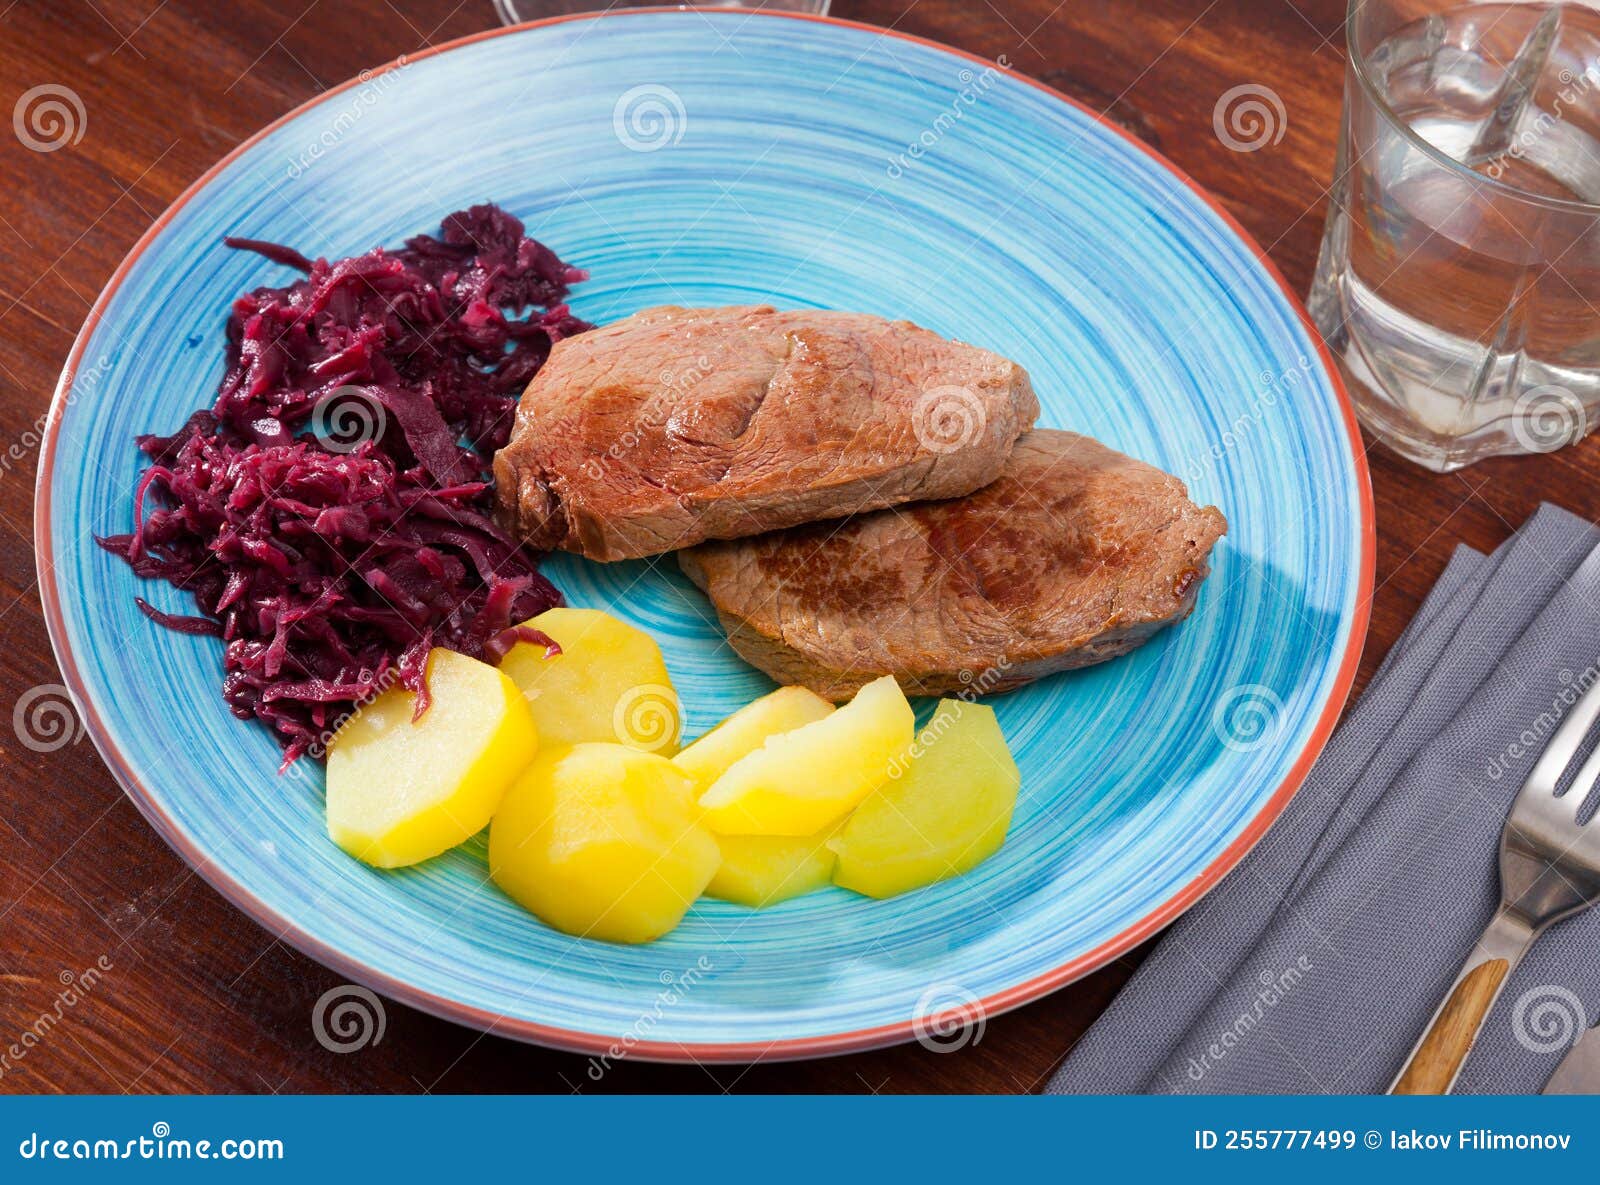 veal steak with potato and sauerkraut